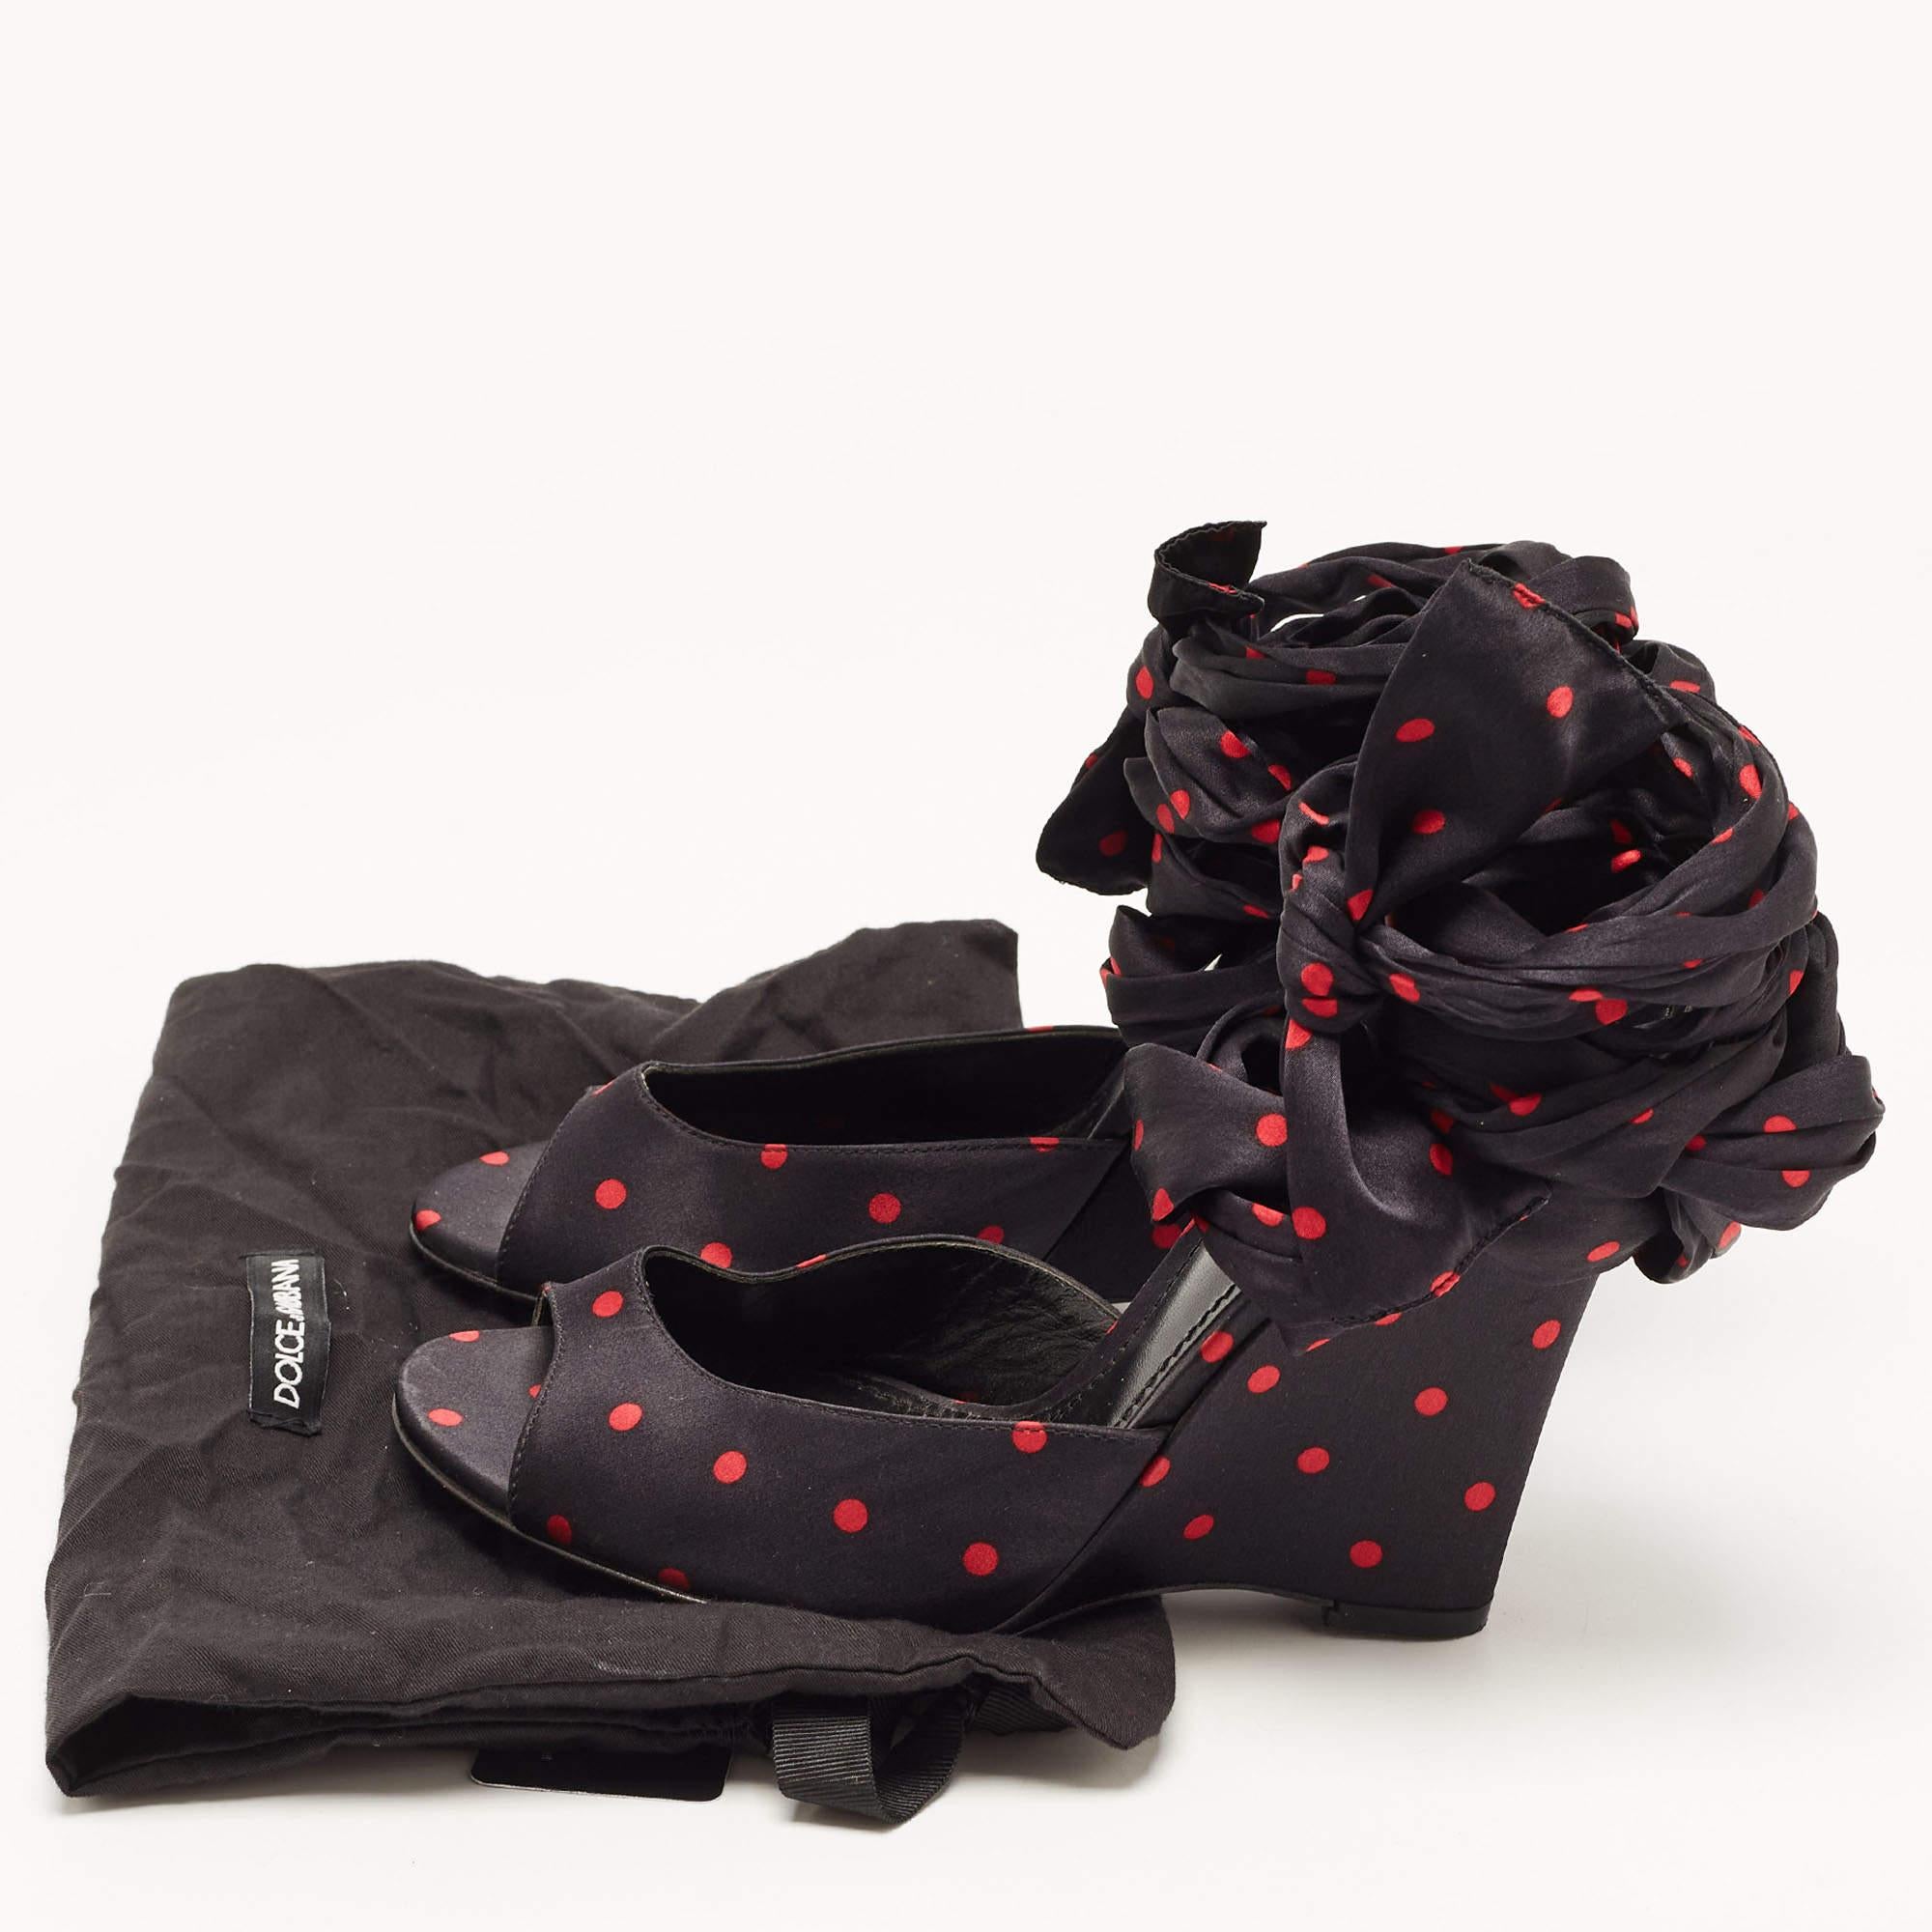 Dolce & Gabbana Black Satin Ankle Wrap Wedge Sandals Size 38.5 5